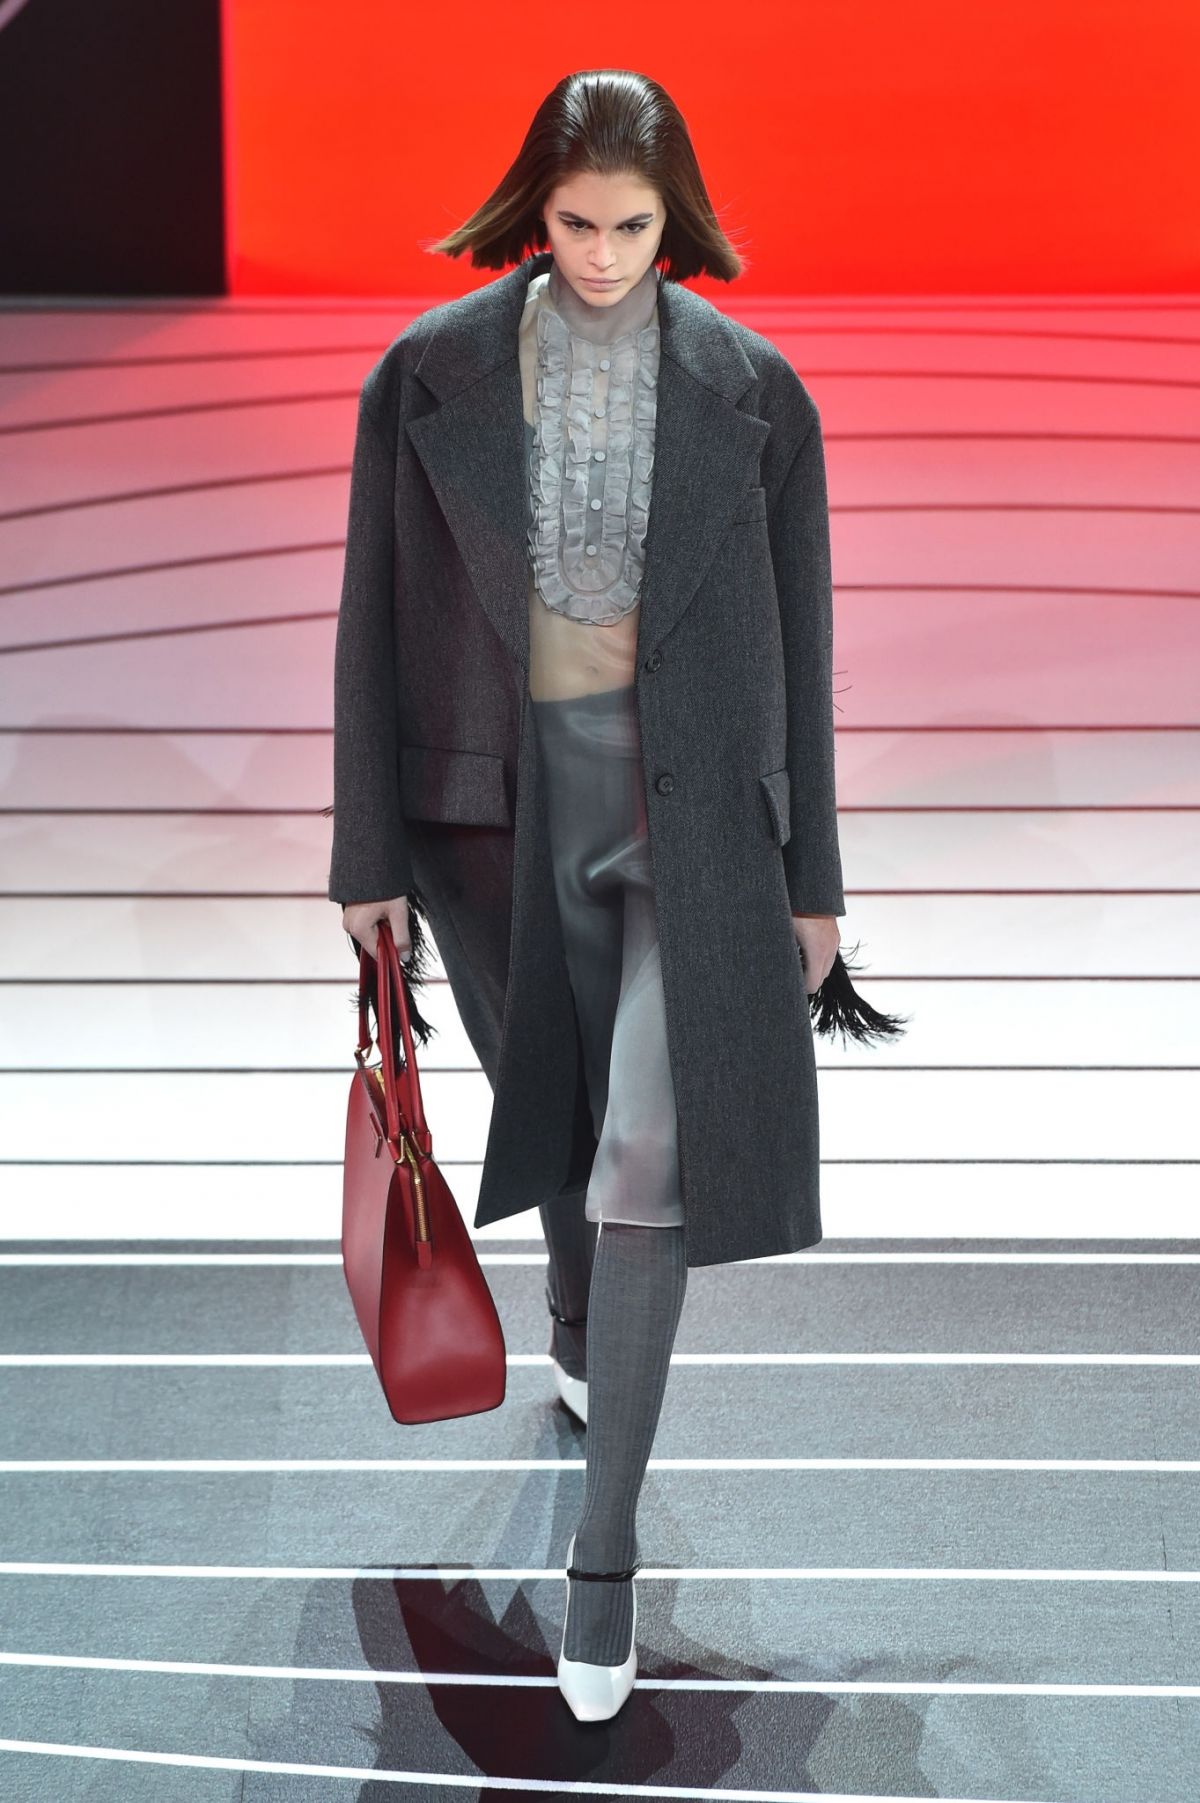 KAIA GERBER at Prada Fashion Show in Milan 02/20/2020 – HawtCelebs